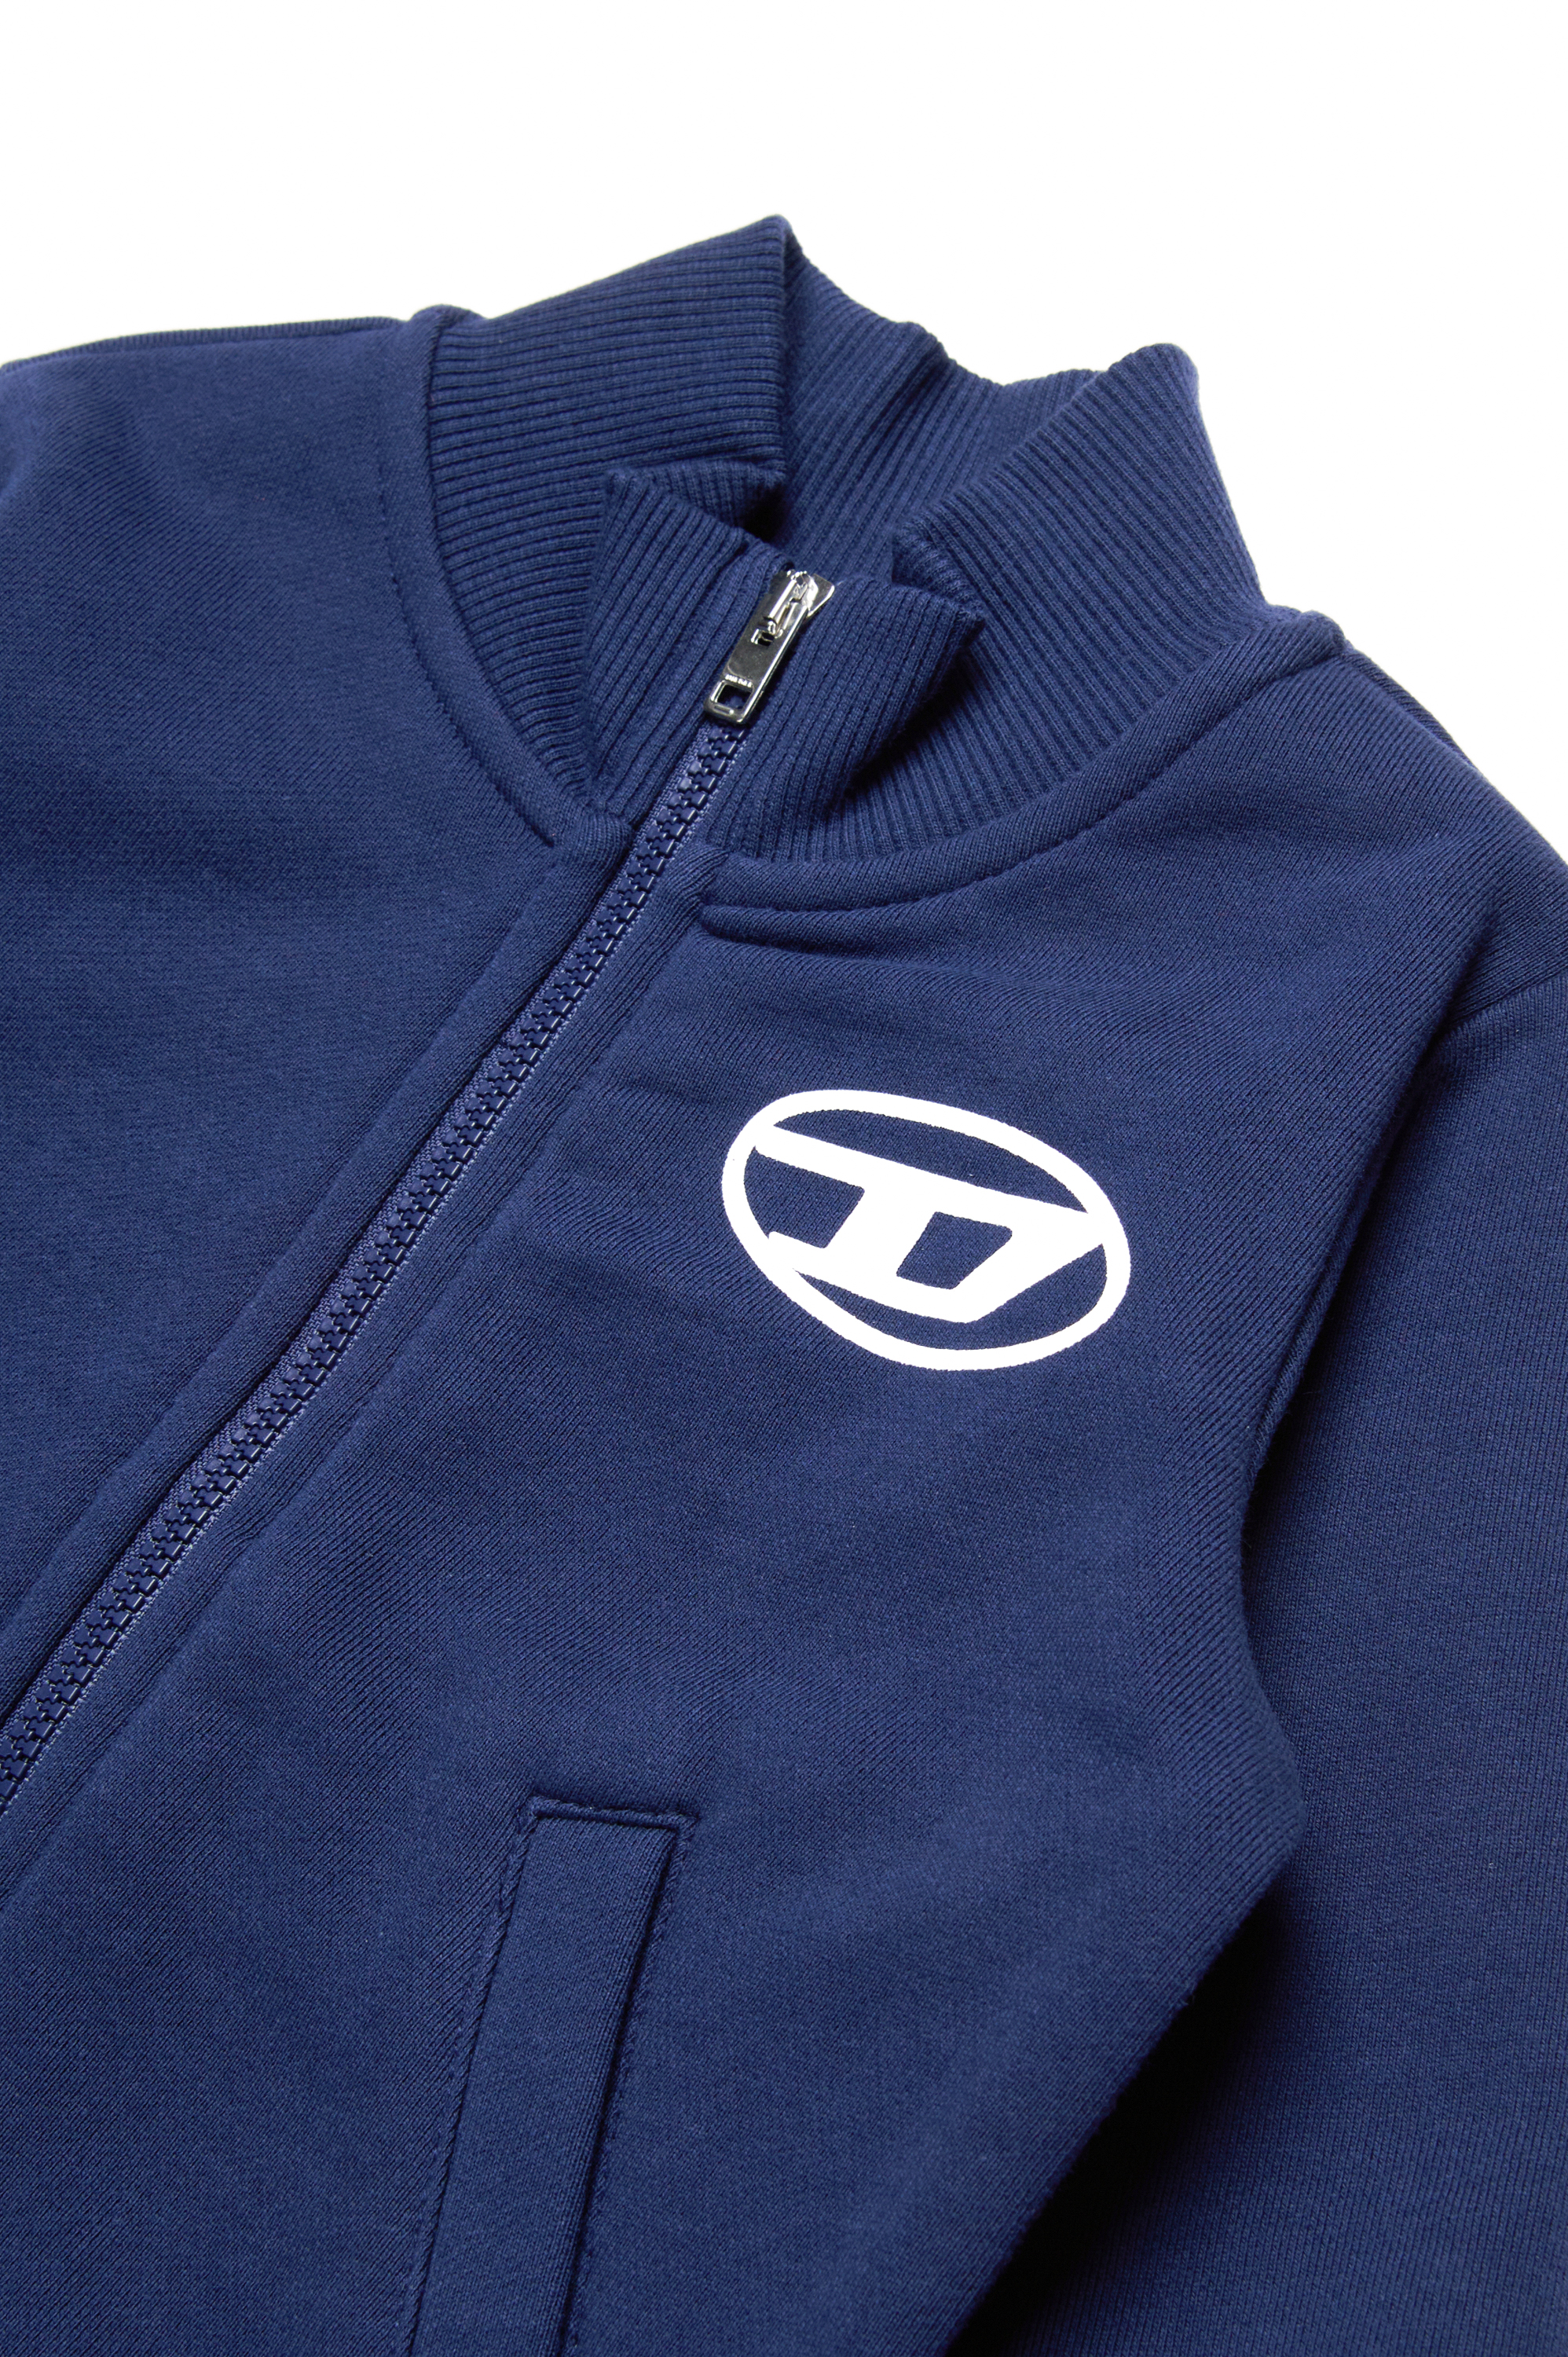 Diesel - SMARCOB, Unisex Zipped sweatshirt with Oval D print in Blue - Image 3